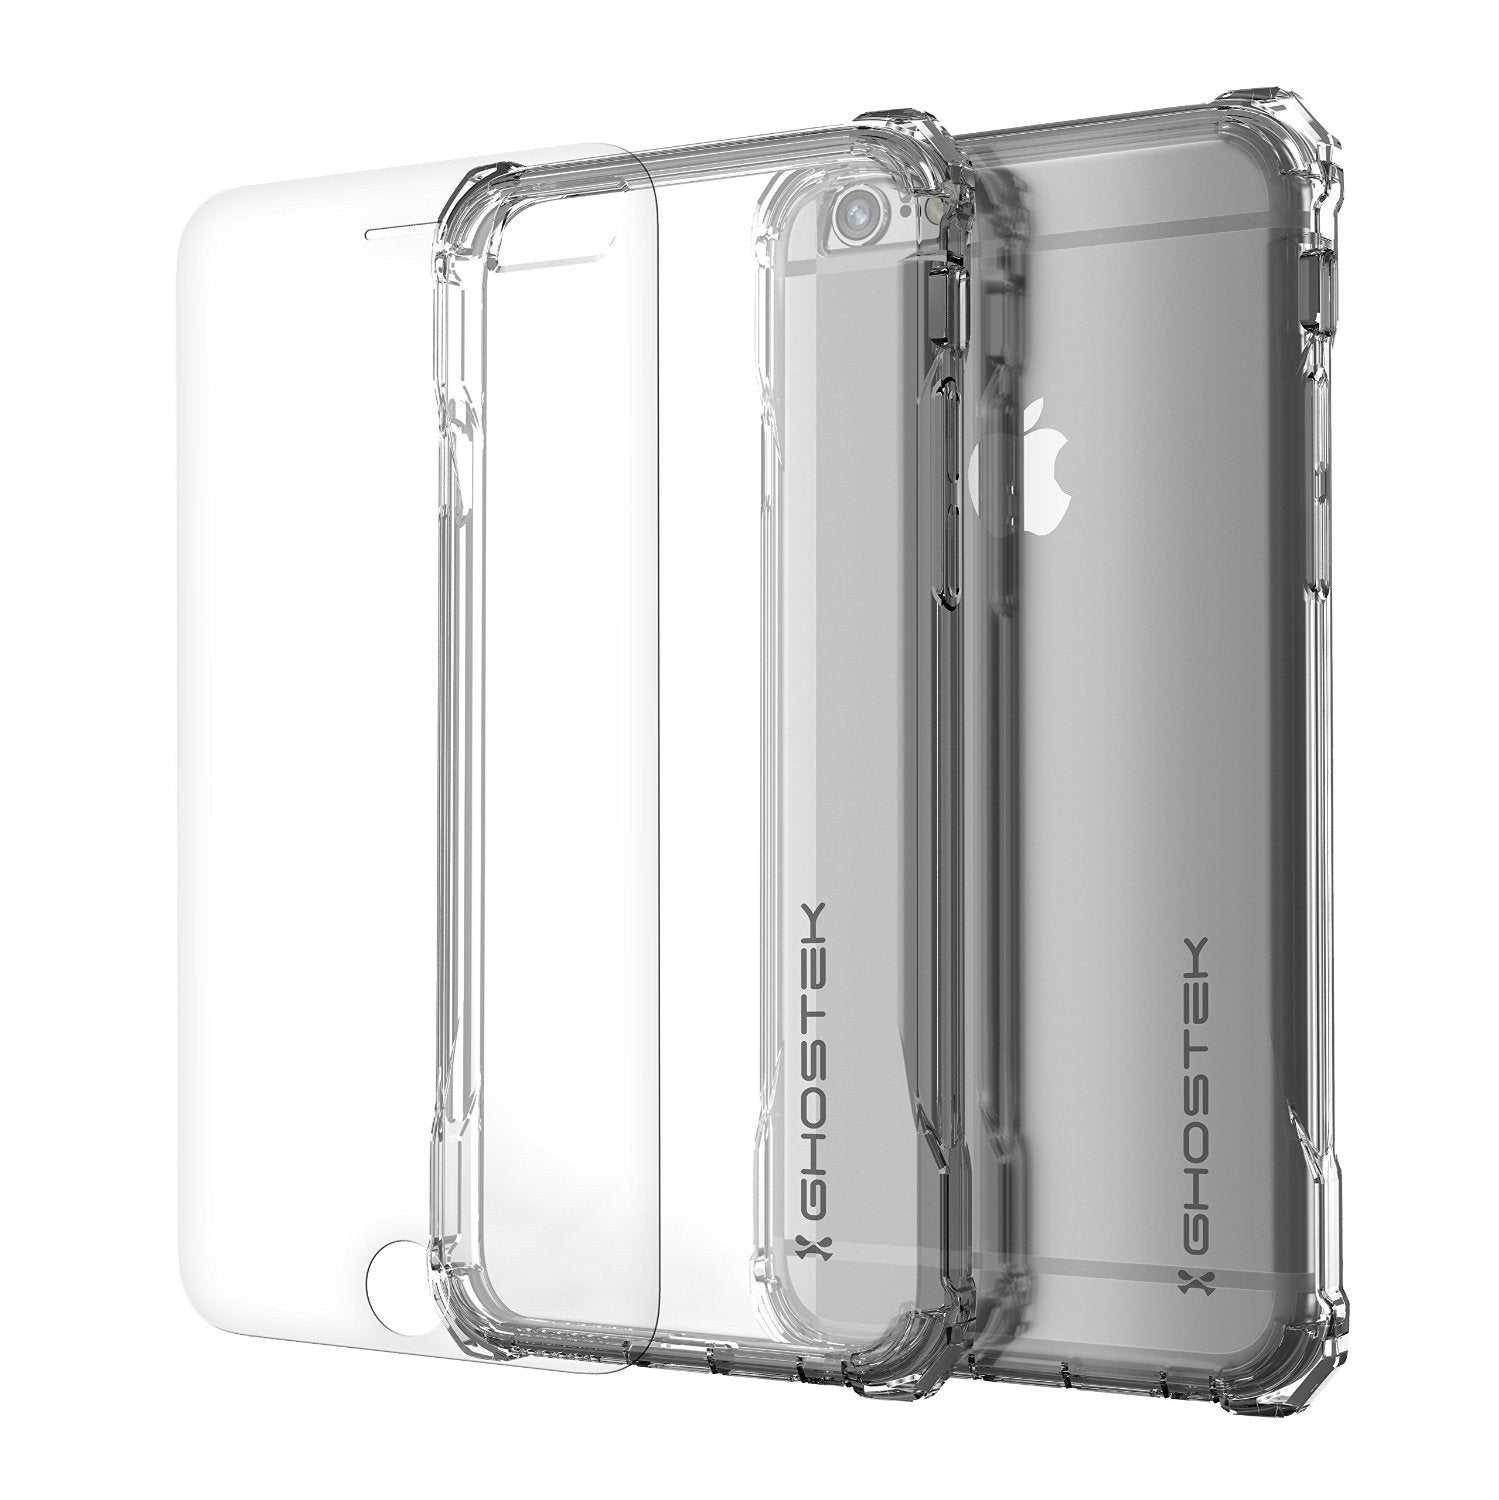 iPhone 6S Case, Ghostek® Covert Clear, Premium Impact Protective Armor | Lifetime Warranty Exchange